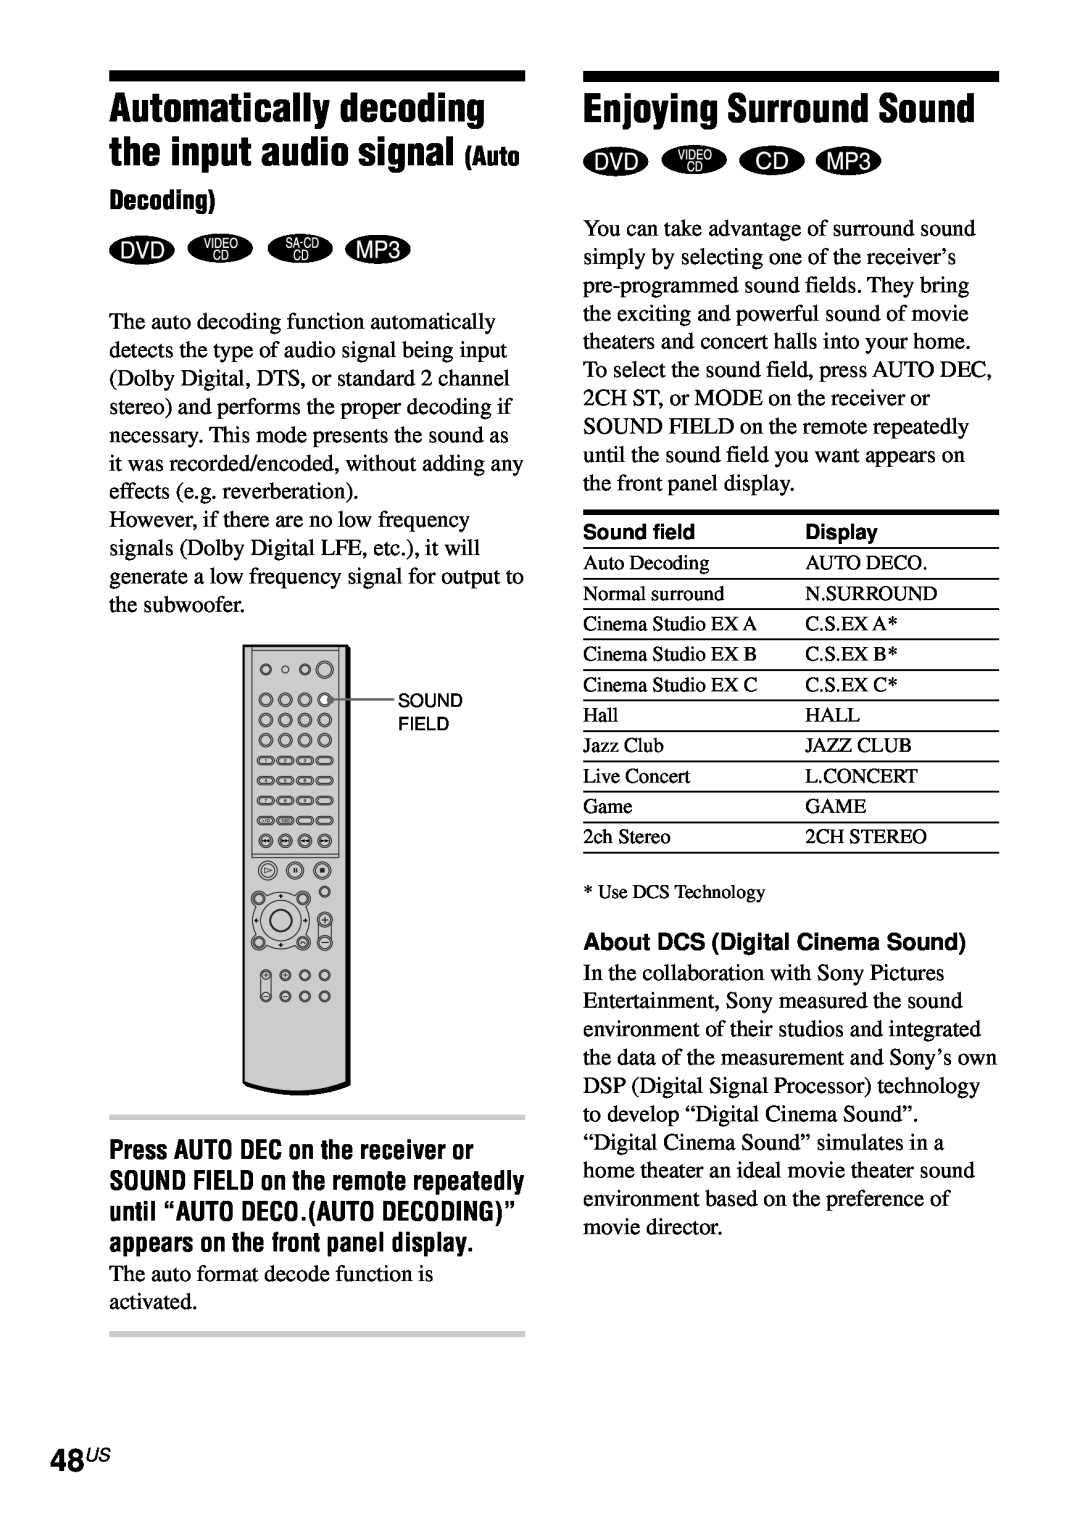 Sony AVD-S50ES operating instructions Enjoying Surround Sound, 48US, Decoding, About DCS Digital Cinema Sound 